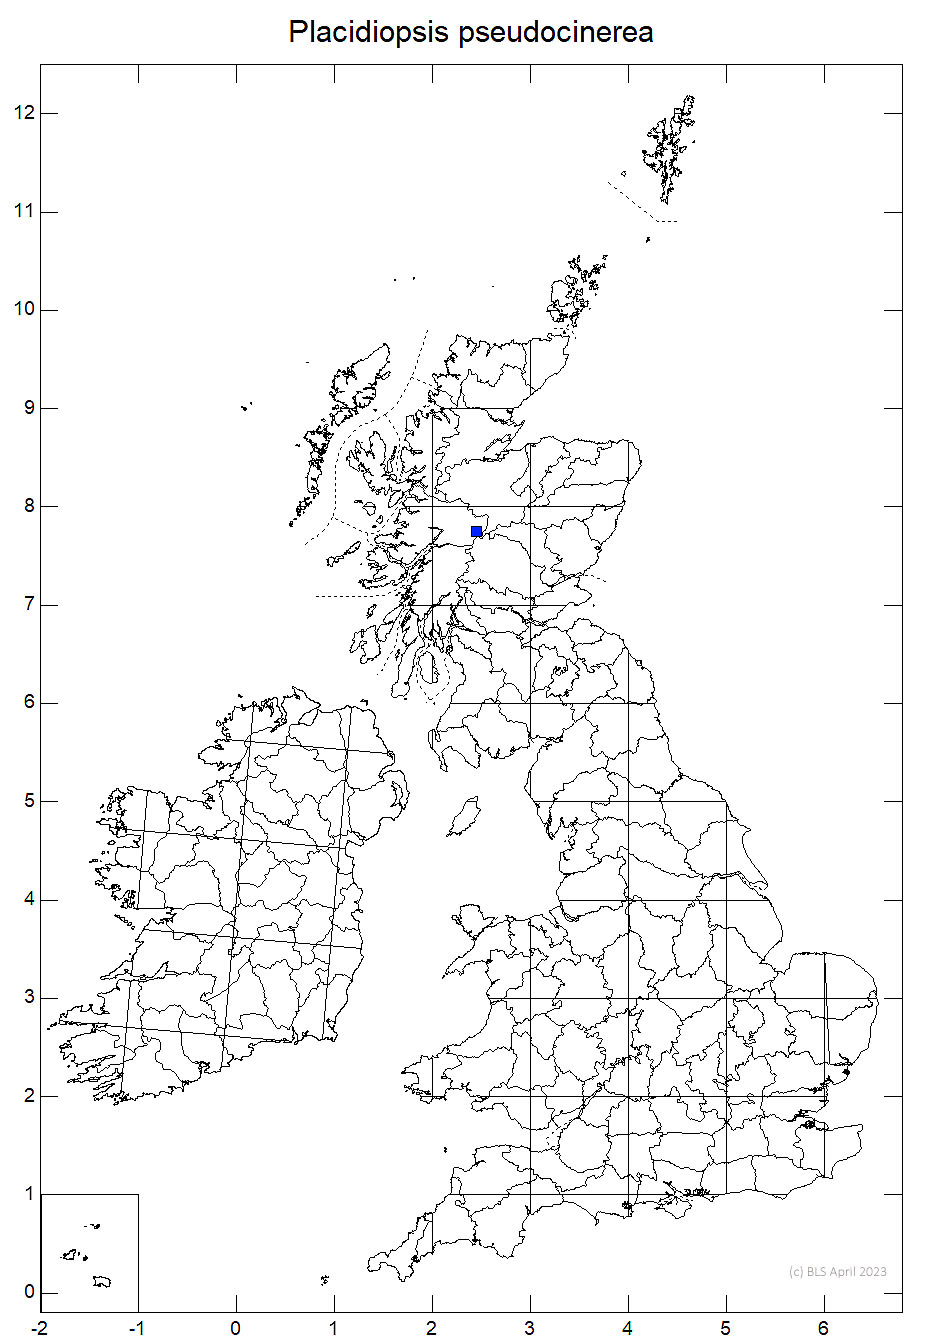 Placidiopsis pseudocinerea 10km sq distribution map